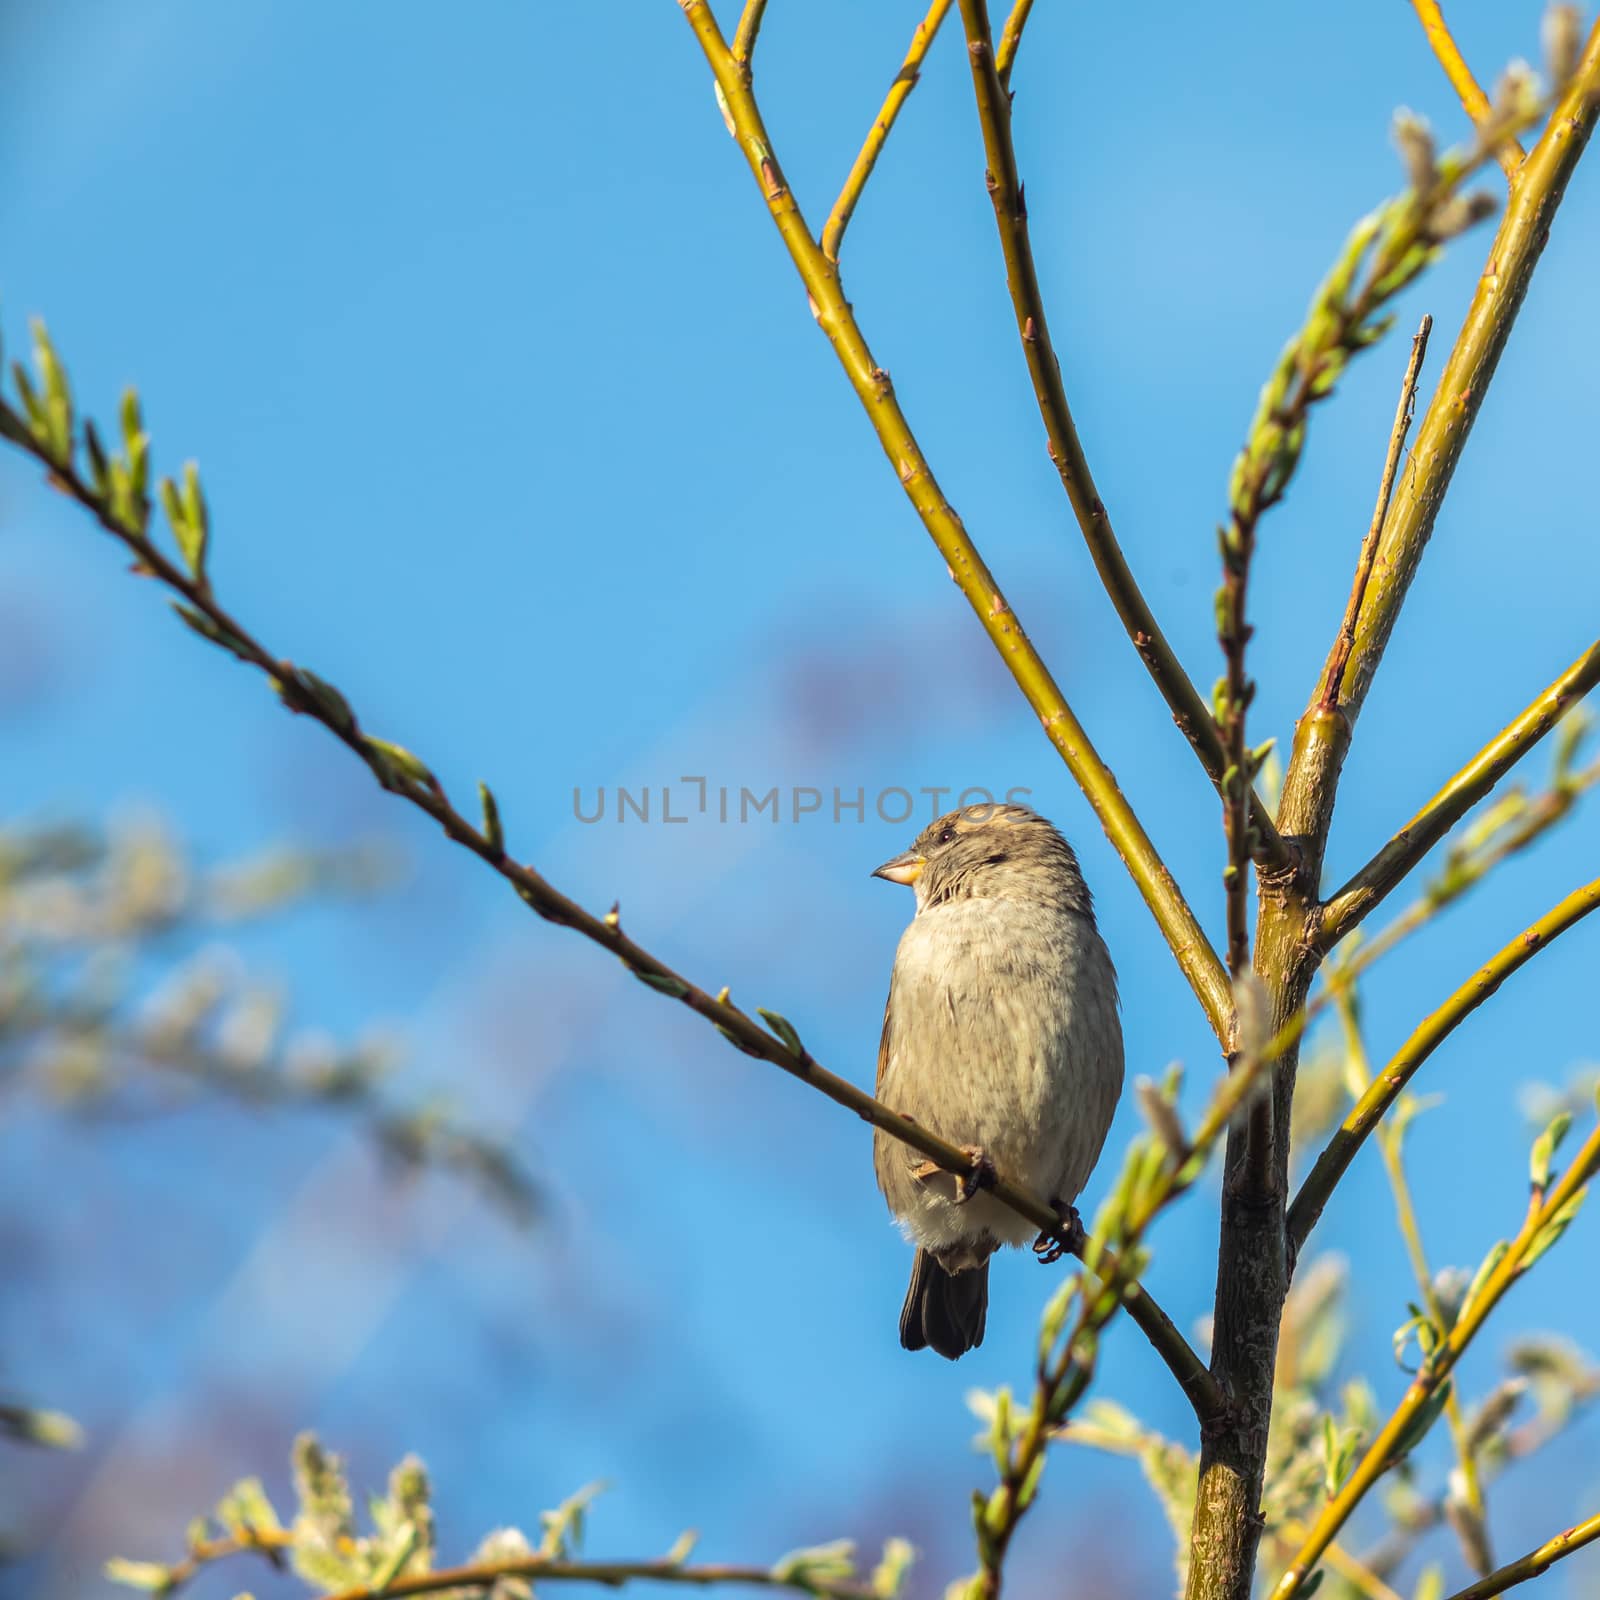 Sparrow bird sitting on tree branch. Bird wildlife scene.